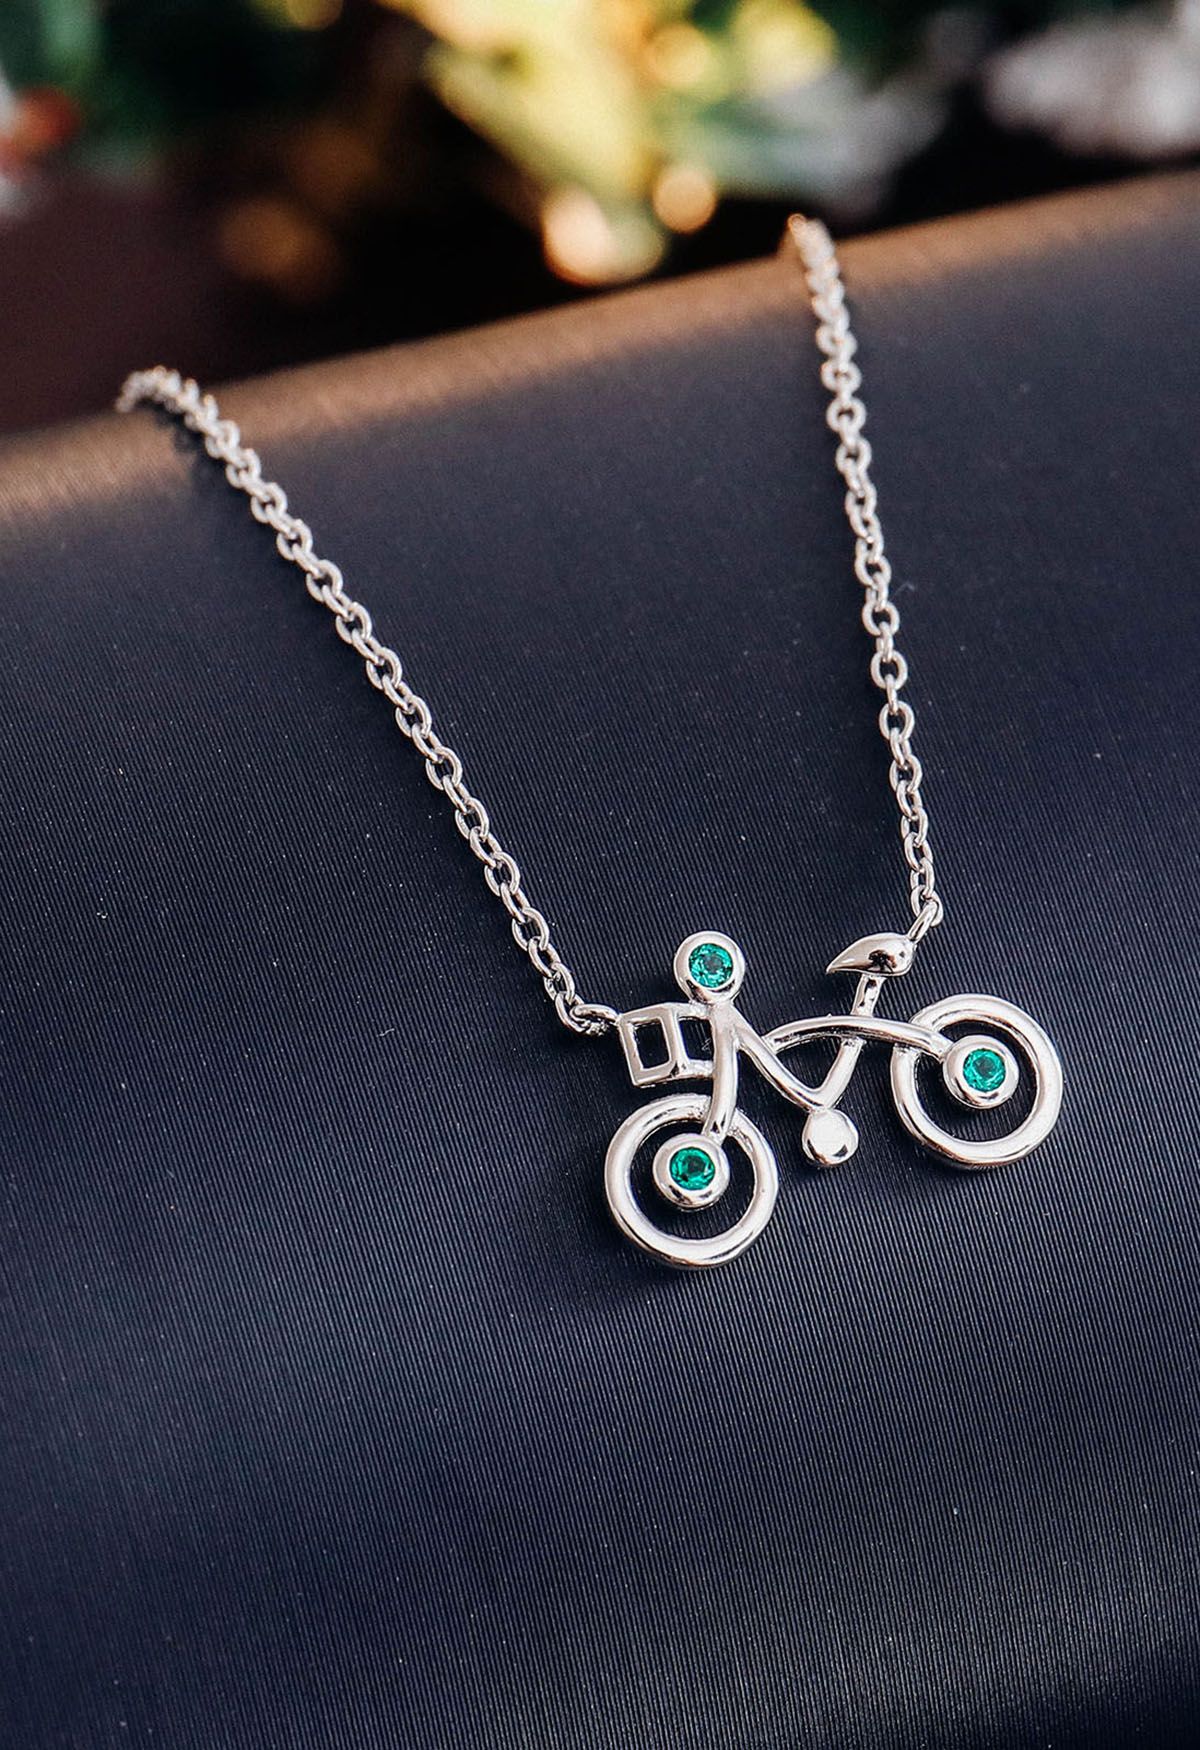 Bicycle Shape Emerald Gem Necklace